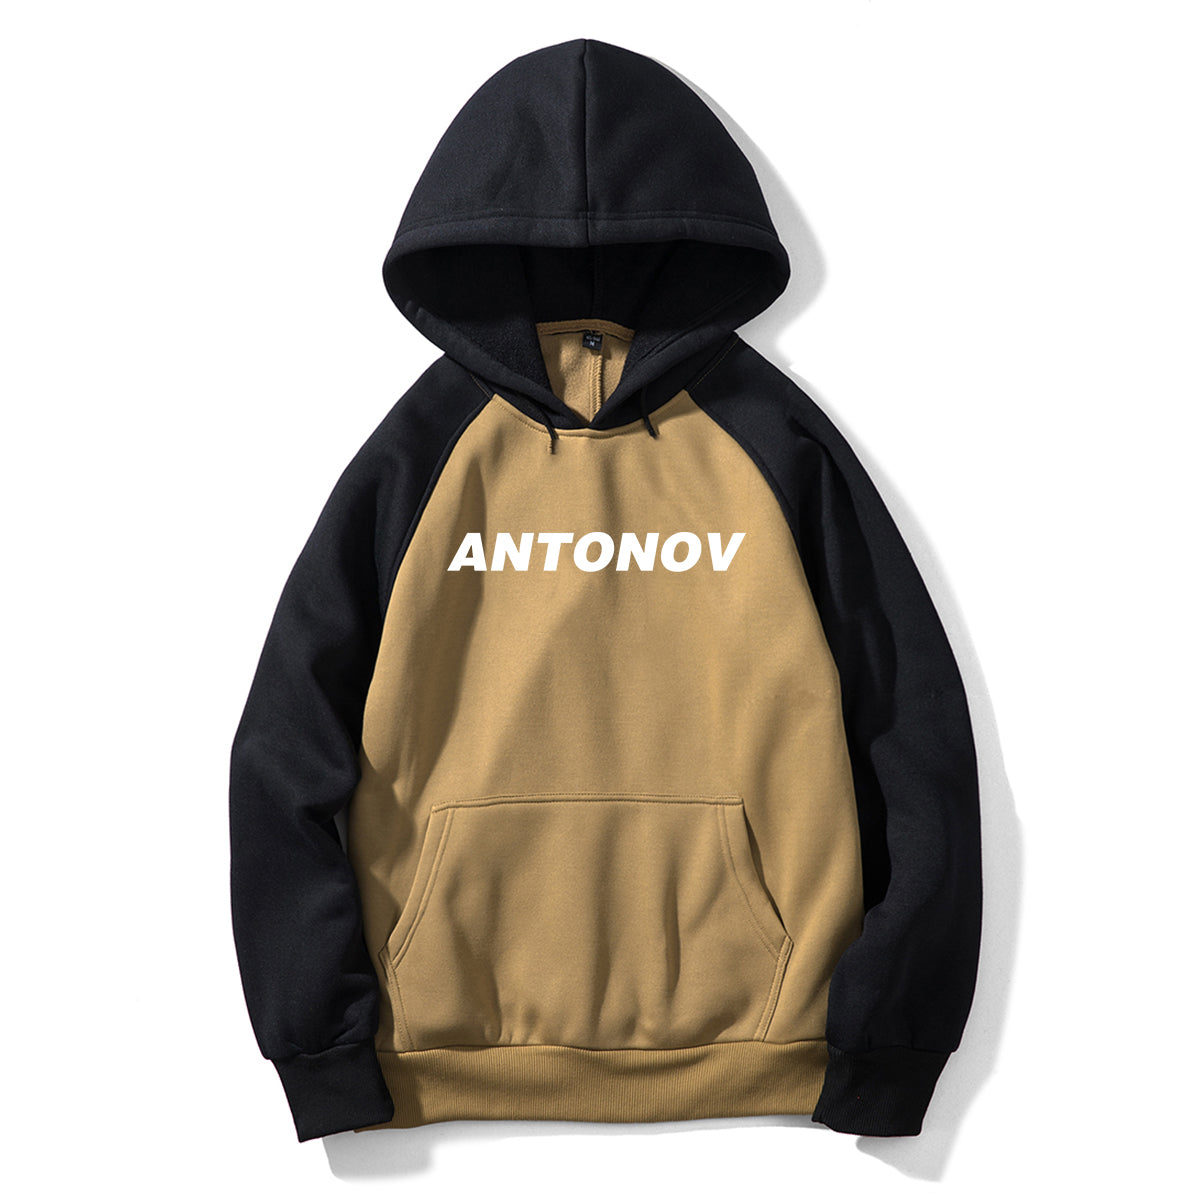 Antonov & Text Designed Colourful Hoodies